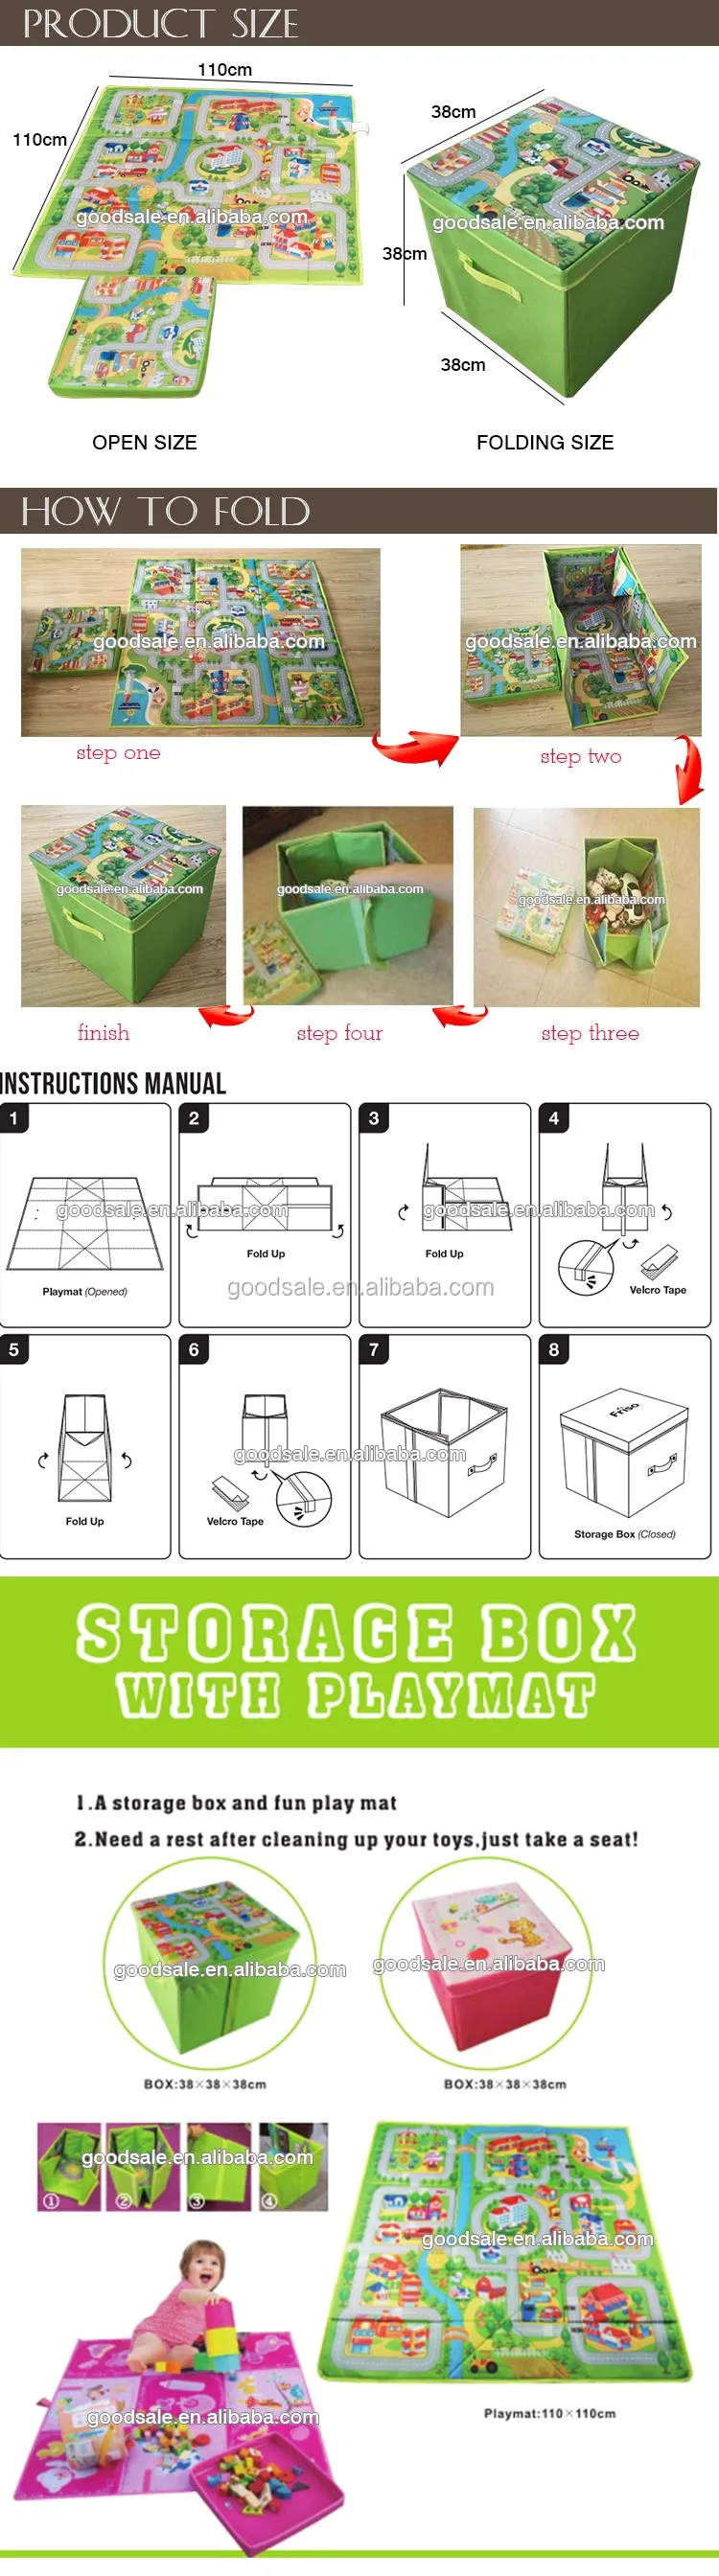 fold up toy box